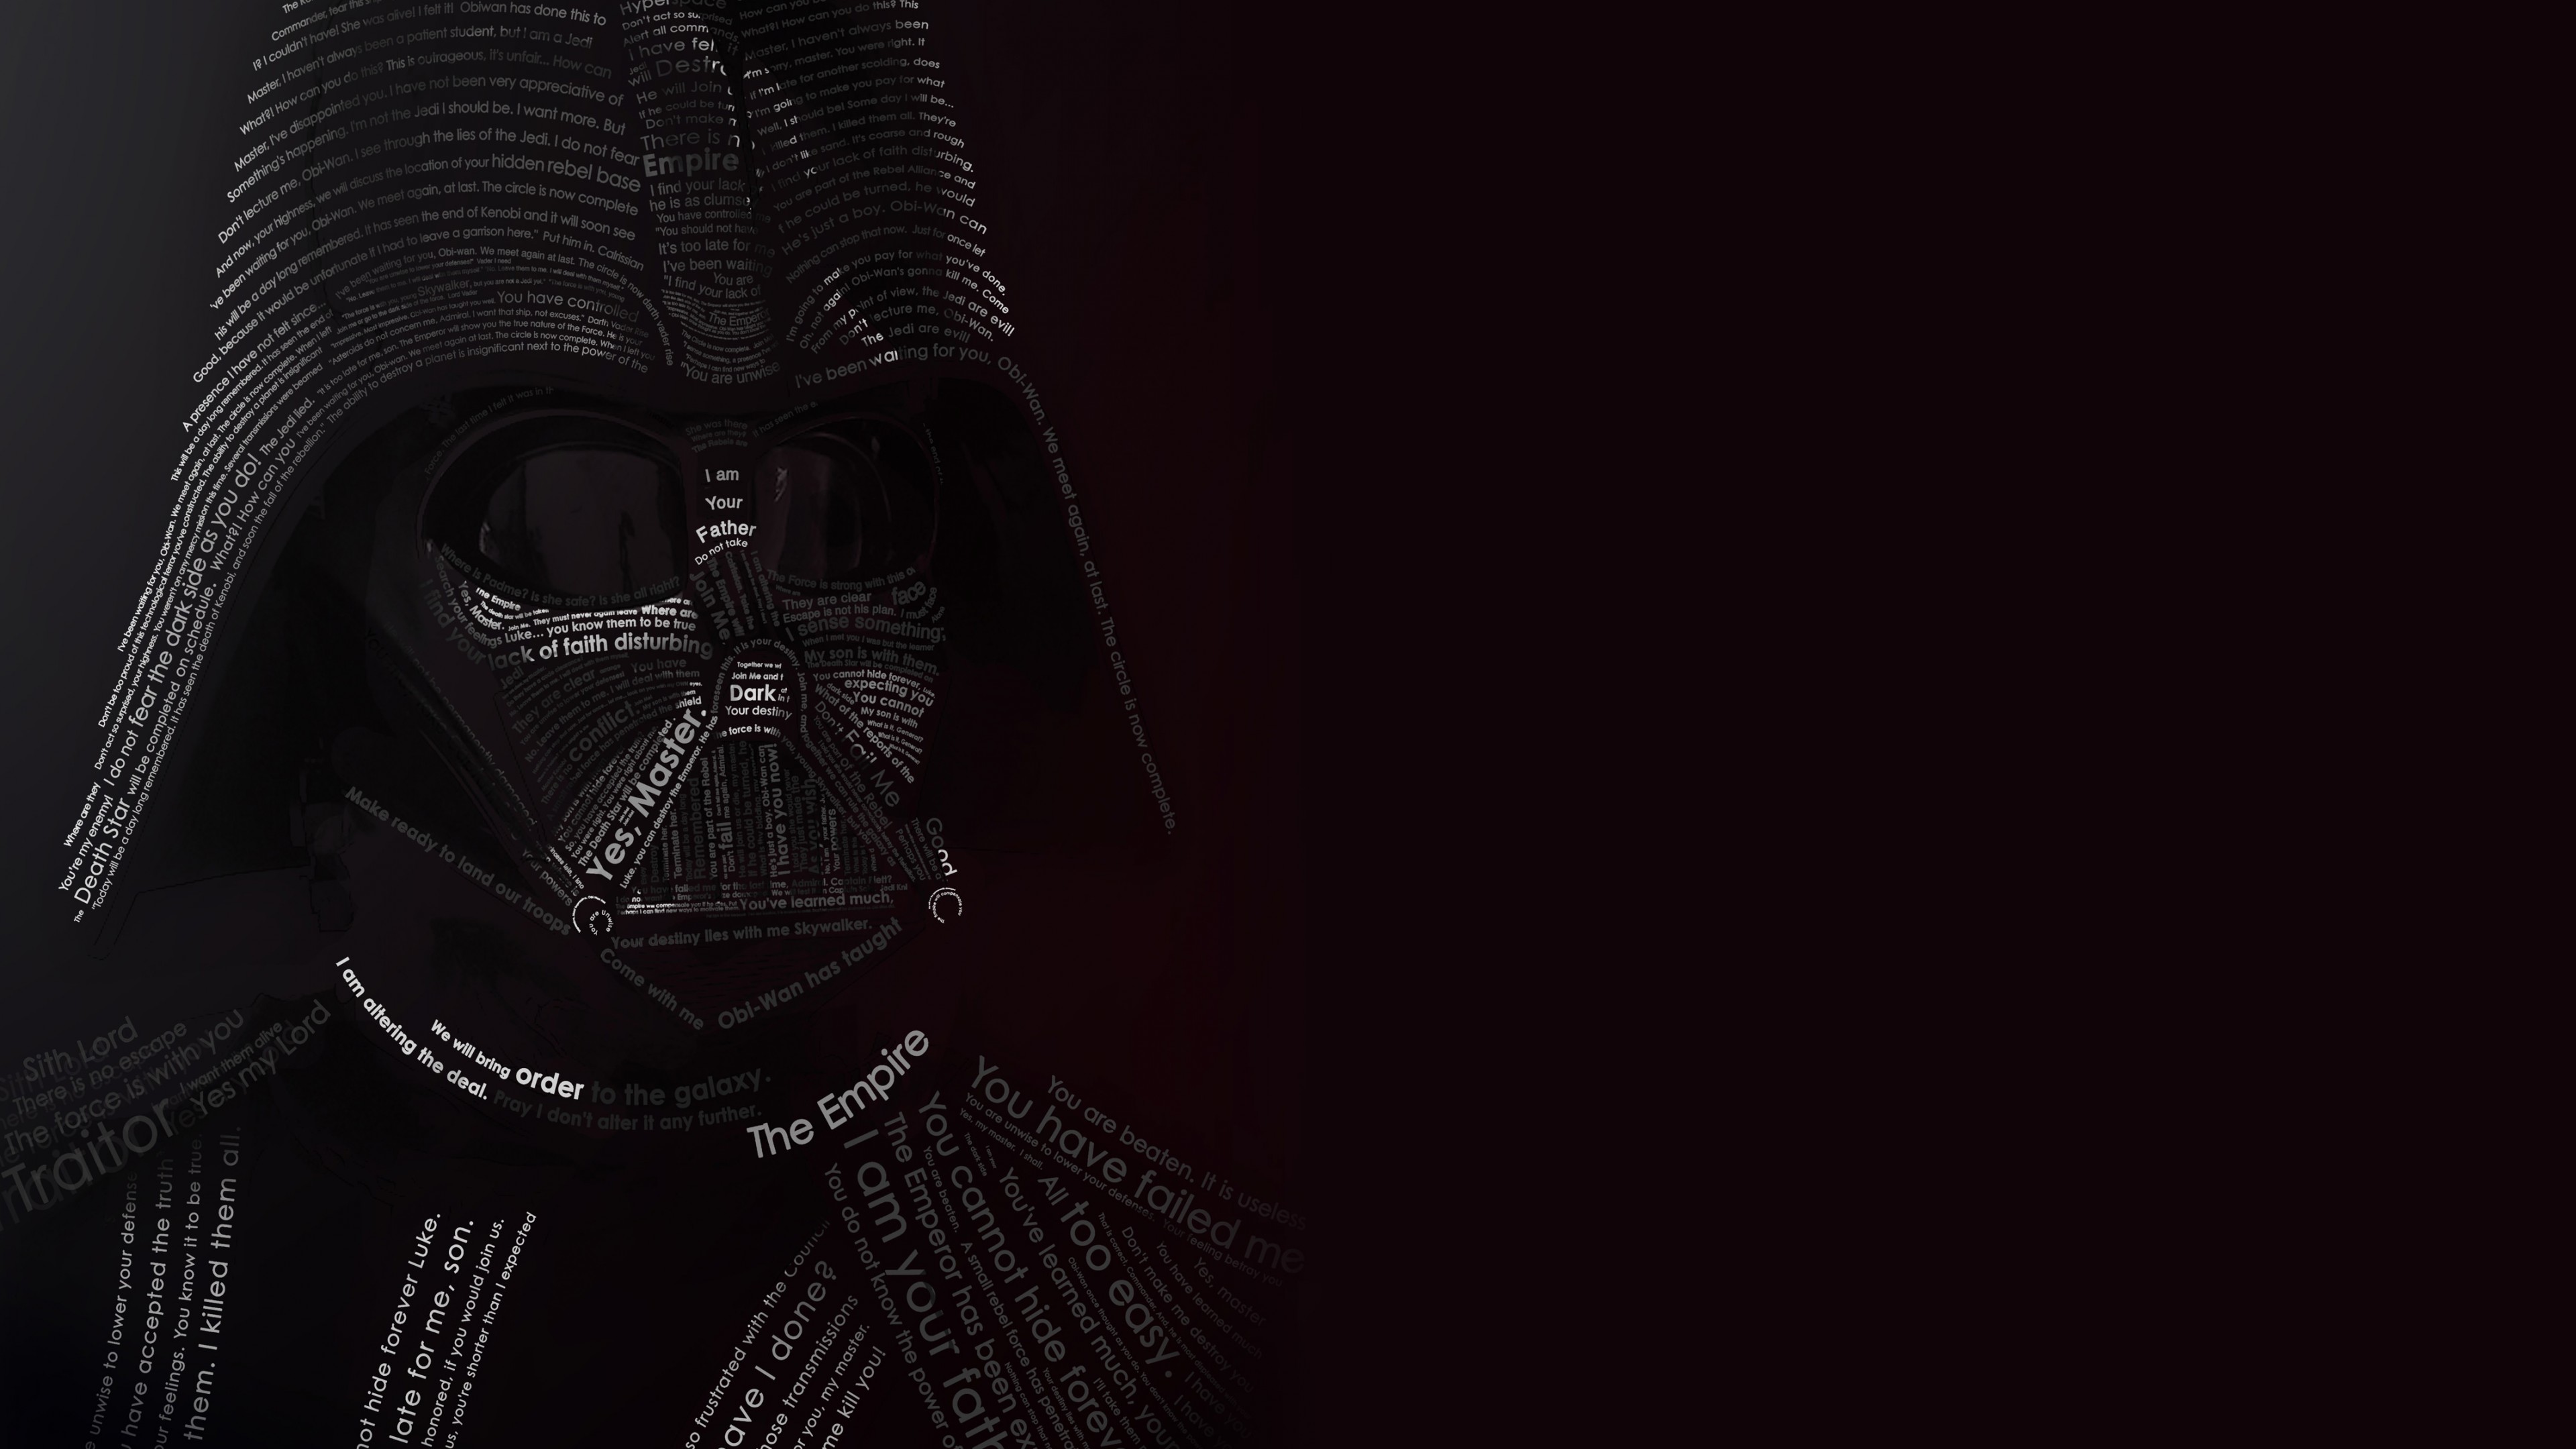 Darth Vader Typographic Portrait Wallpaper for Desktop 4K 3840 x 2160